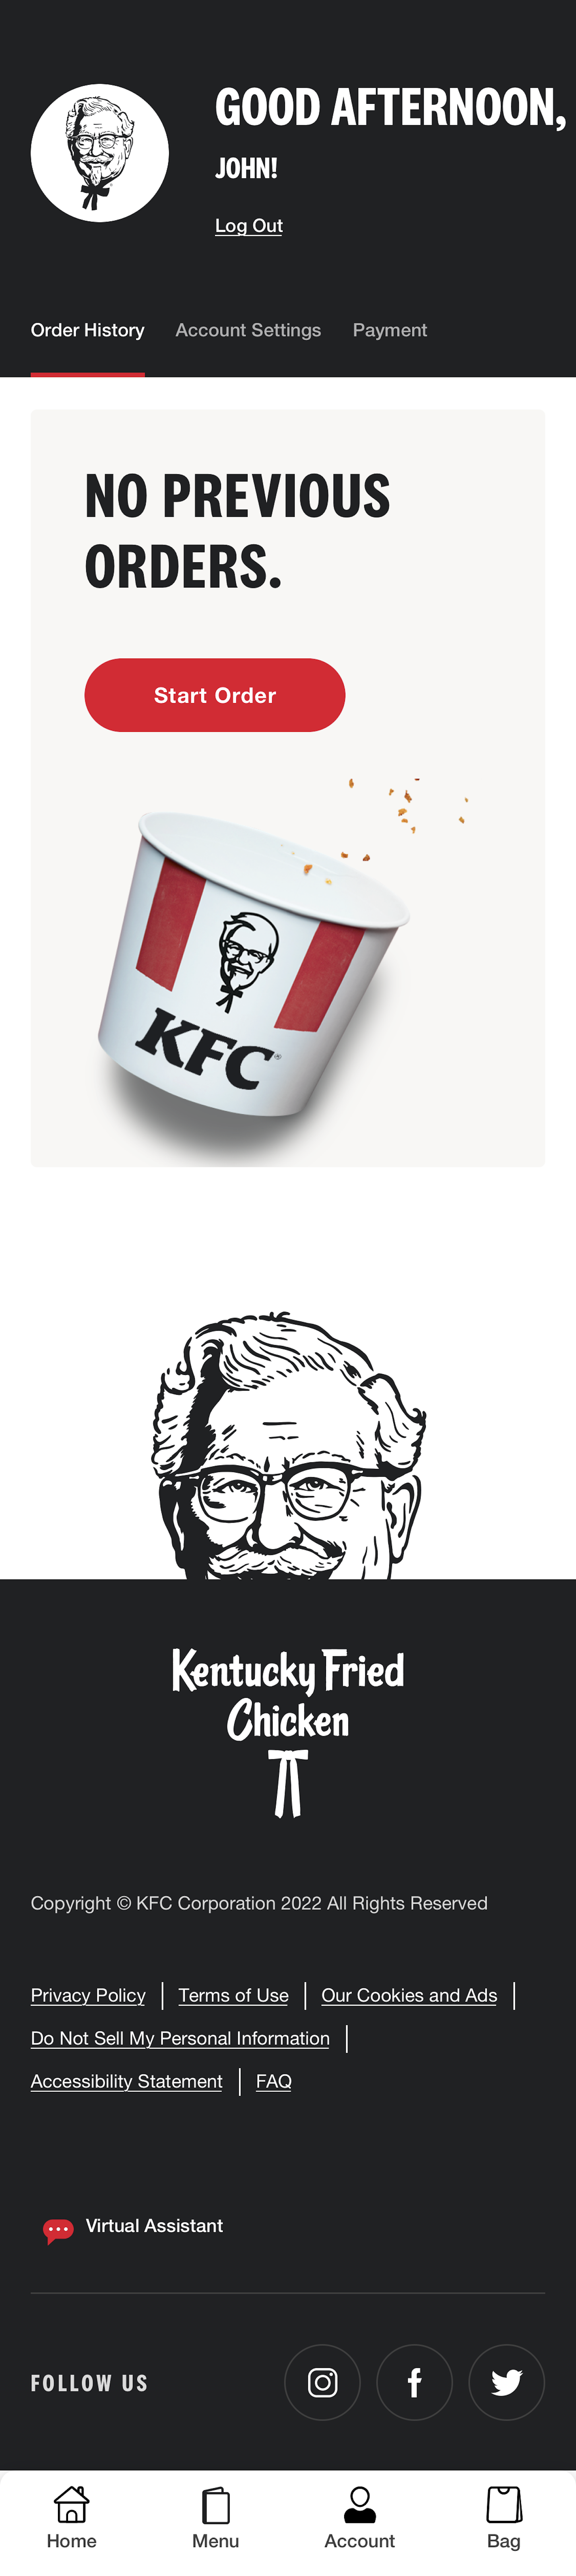 Mobile screenshot of KFC